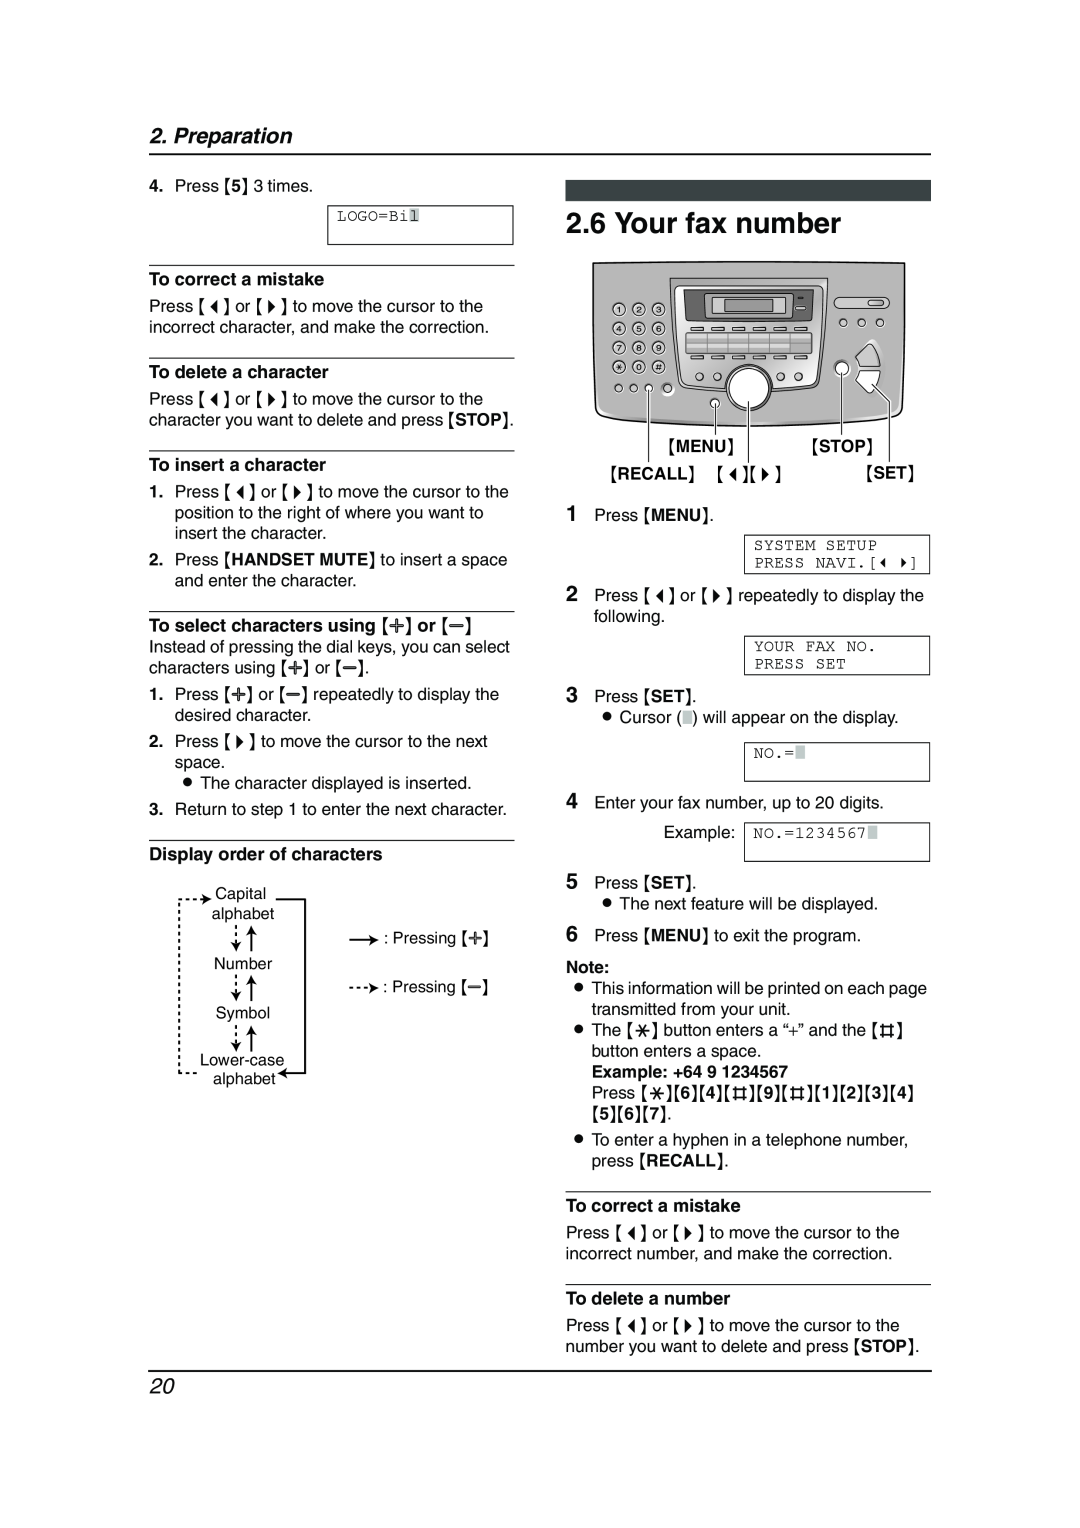 Panasonic KX-FL511AL manual Your fax number, Preparation, Recall, Press *64#9#1234 